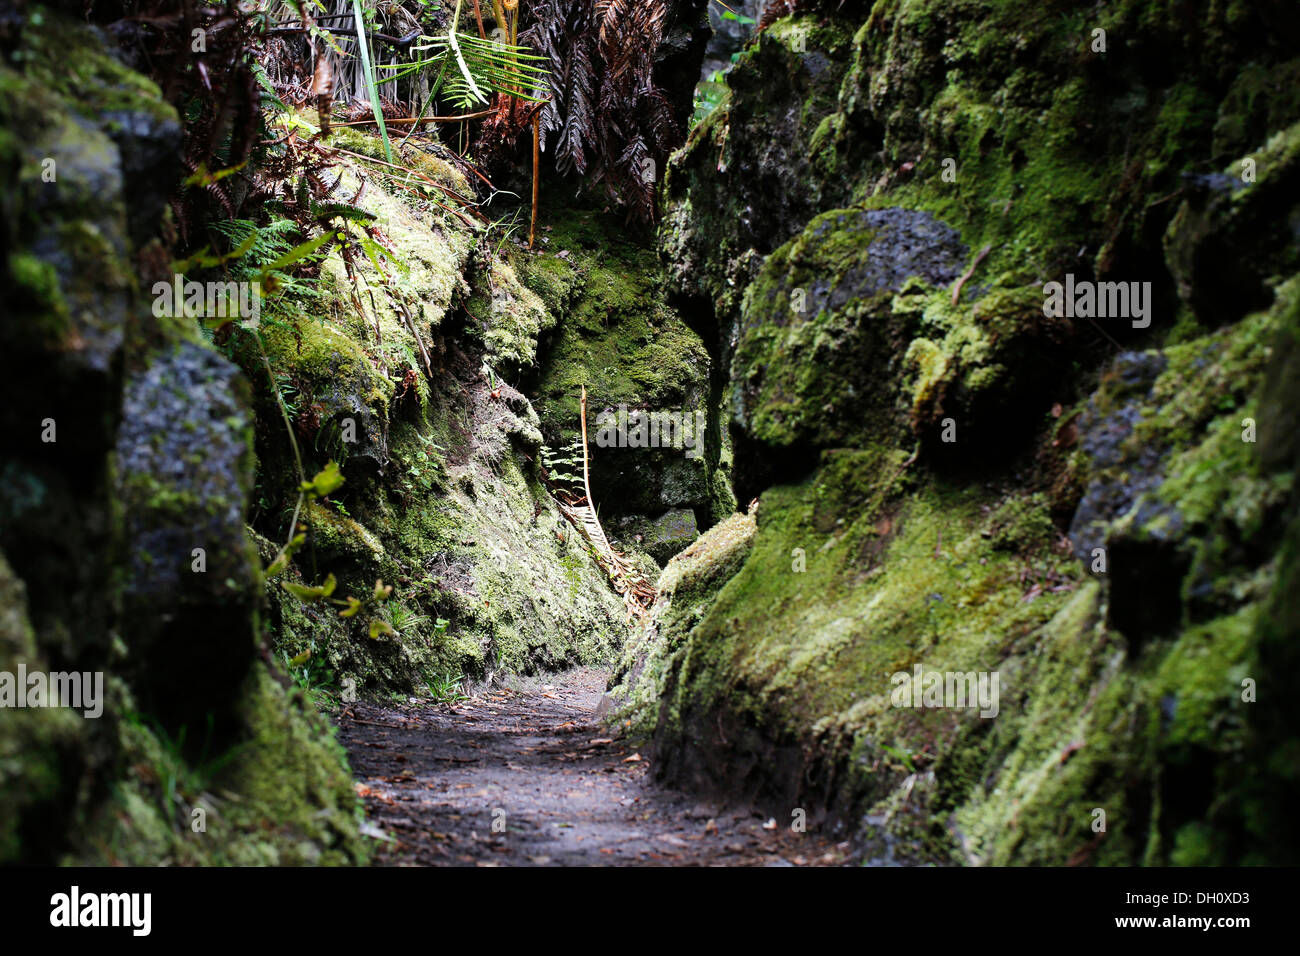 Narrowing of the path, Halemaumau Trail 'Into the Volcano', down into the caldera, Kilauea Volcano Stock Photo